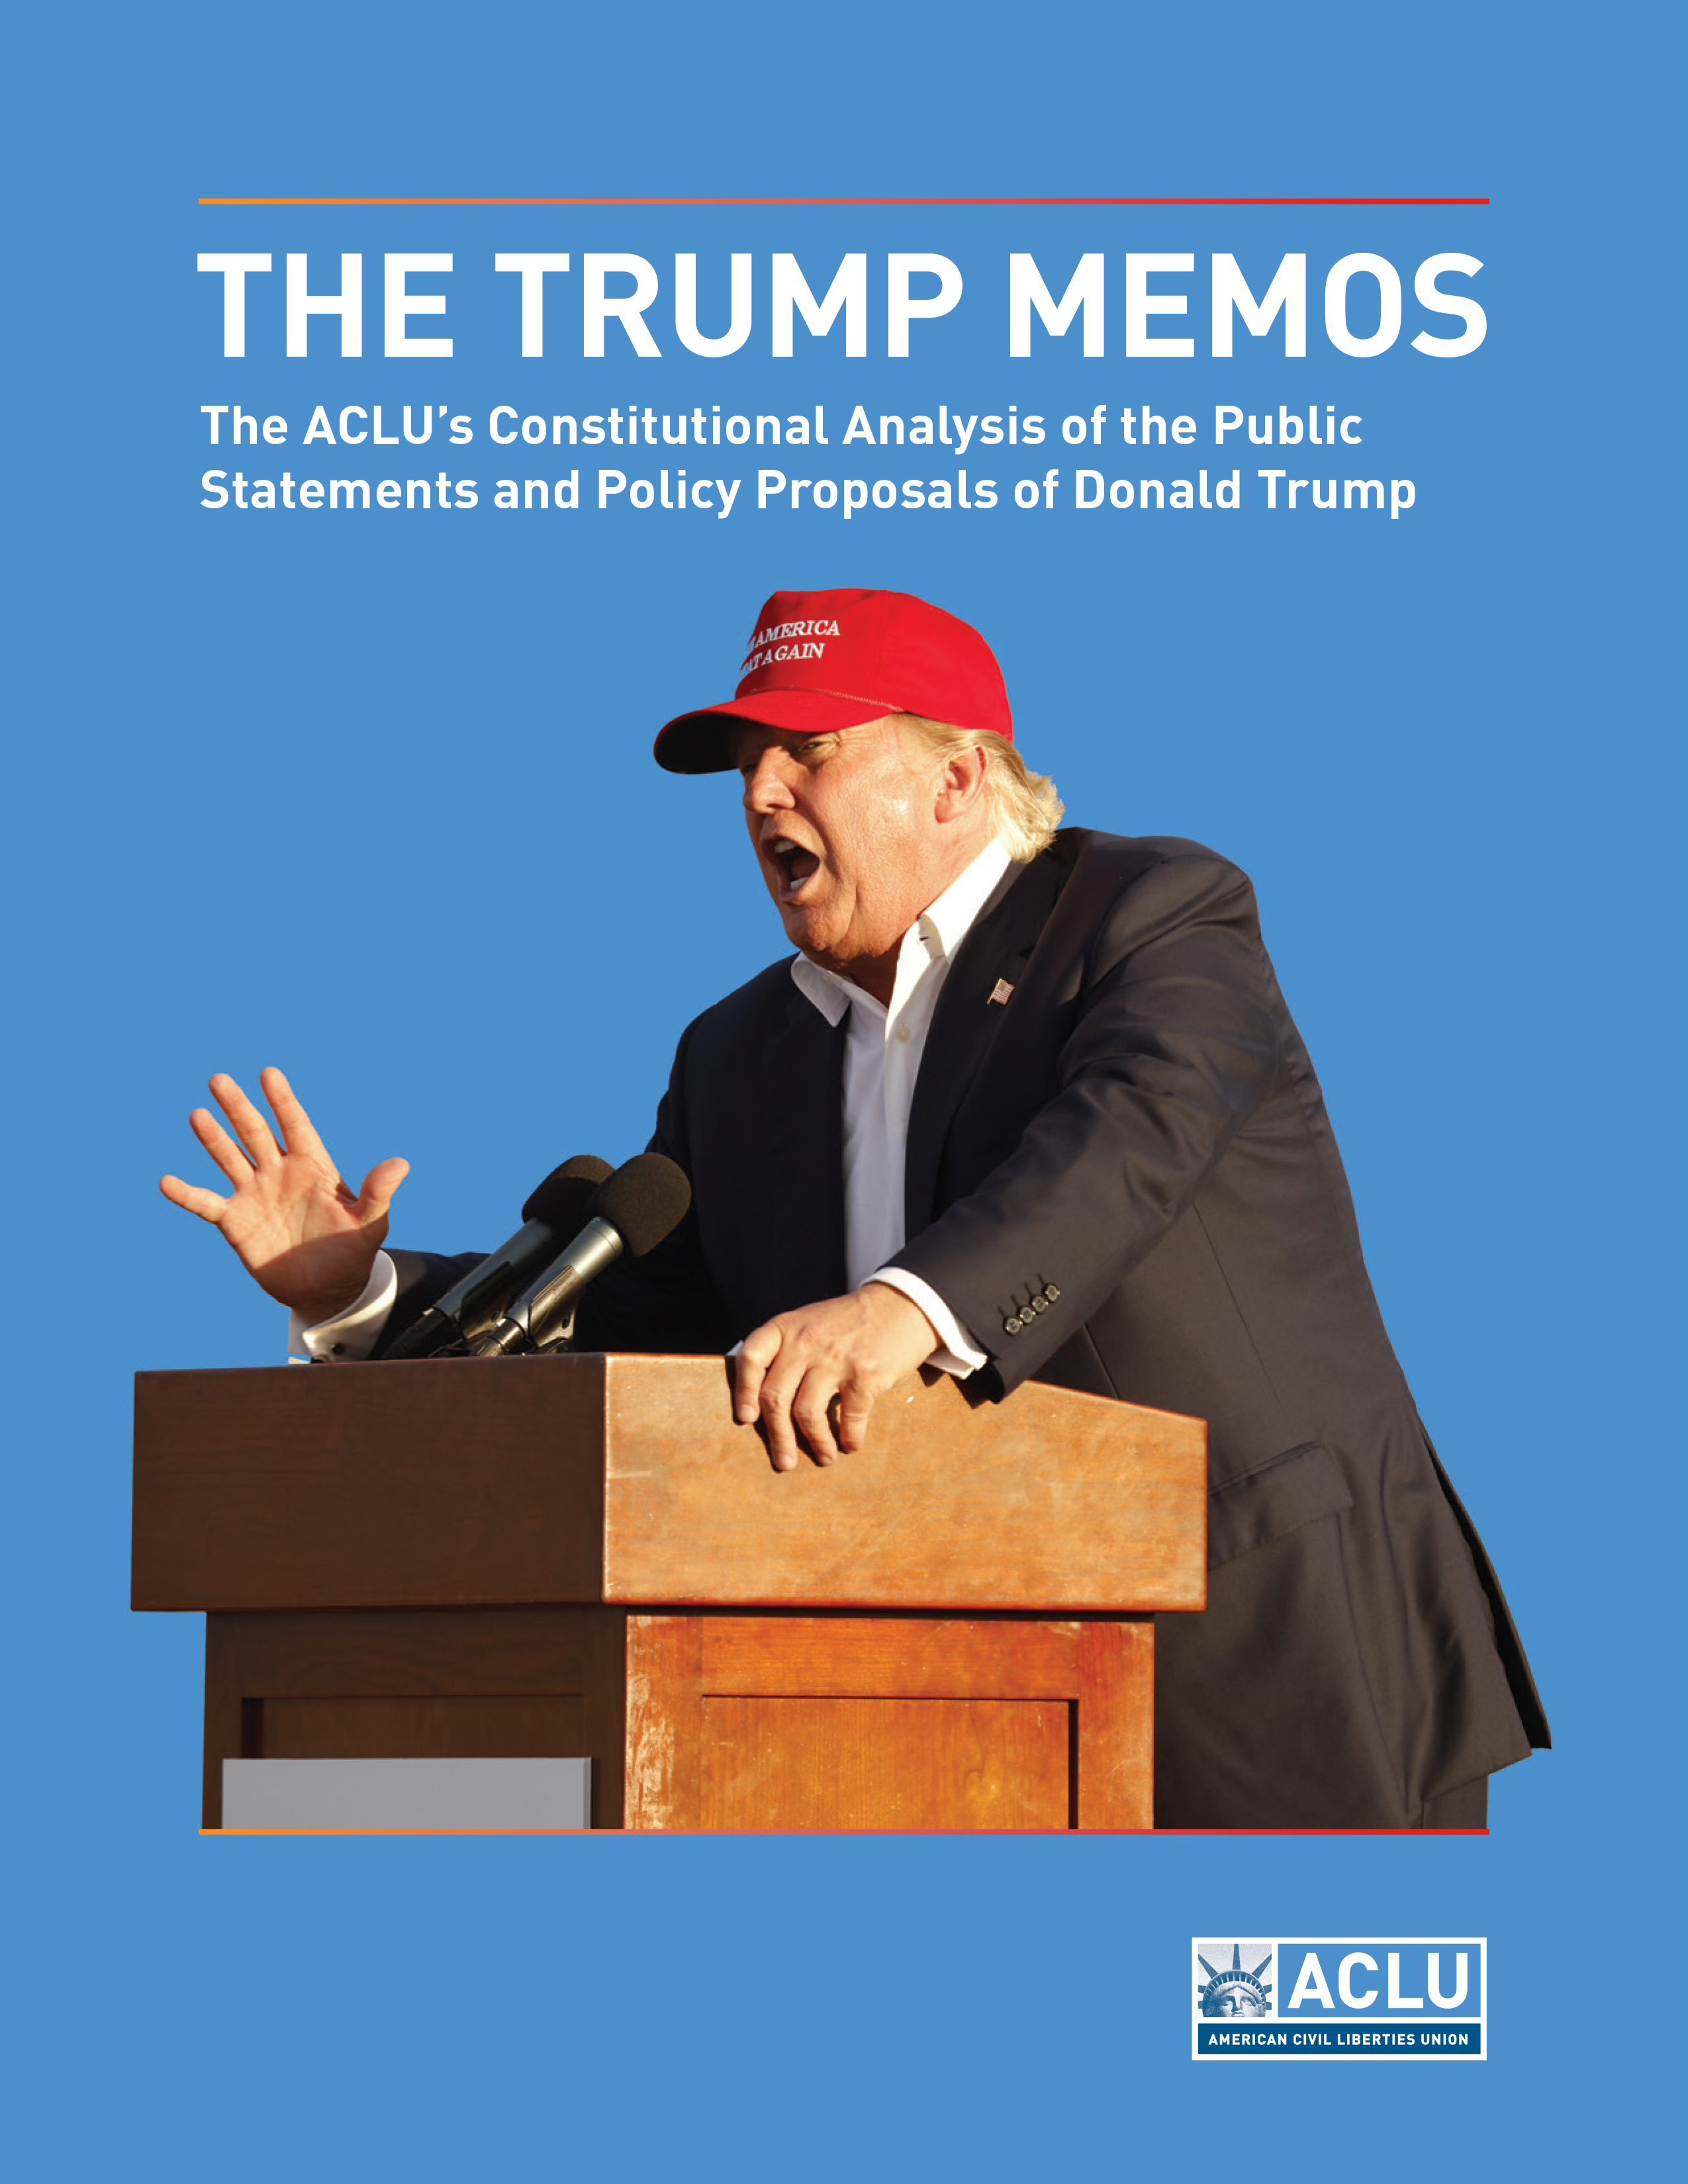 The Trump Memos | American Civil Liberties Union2550 x 3300